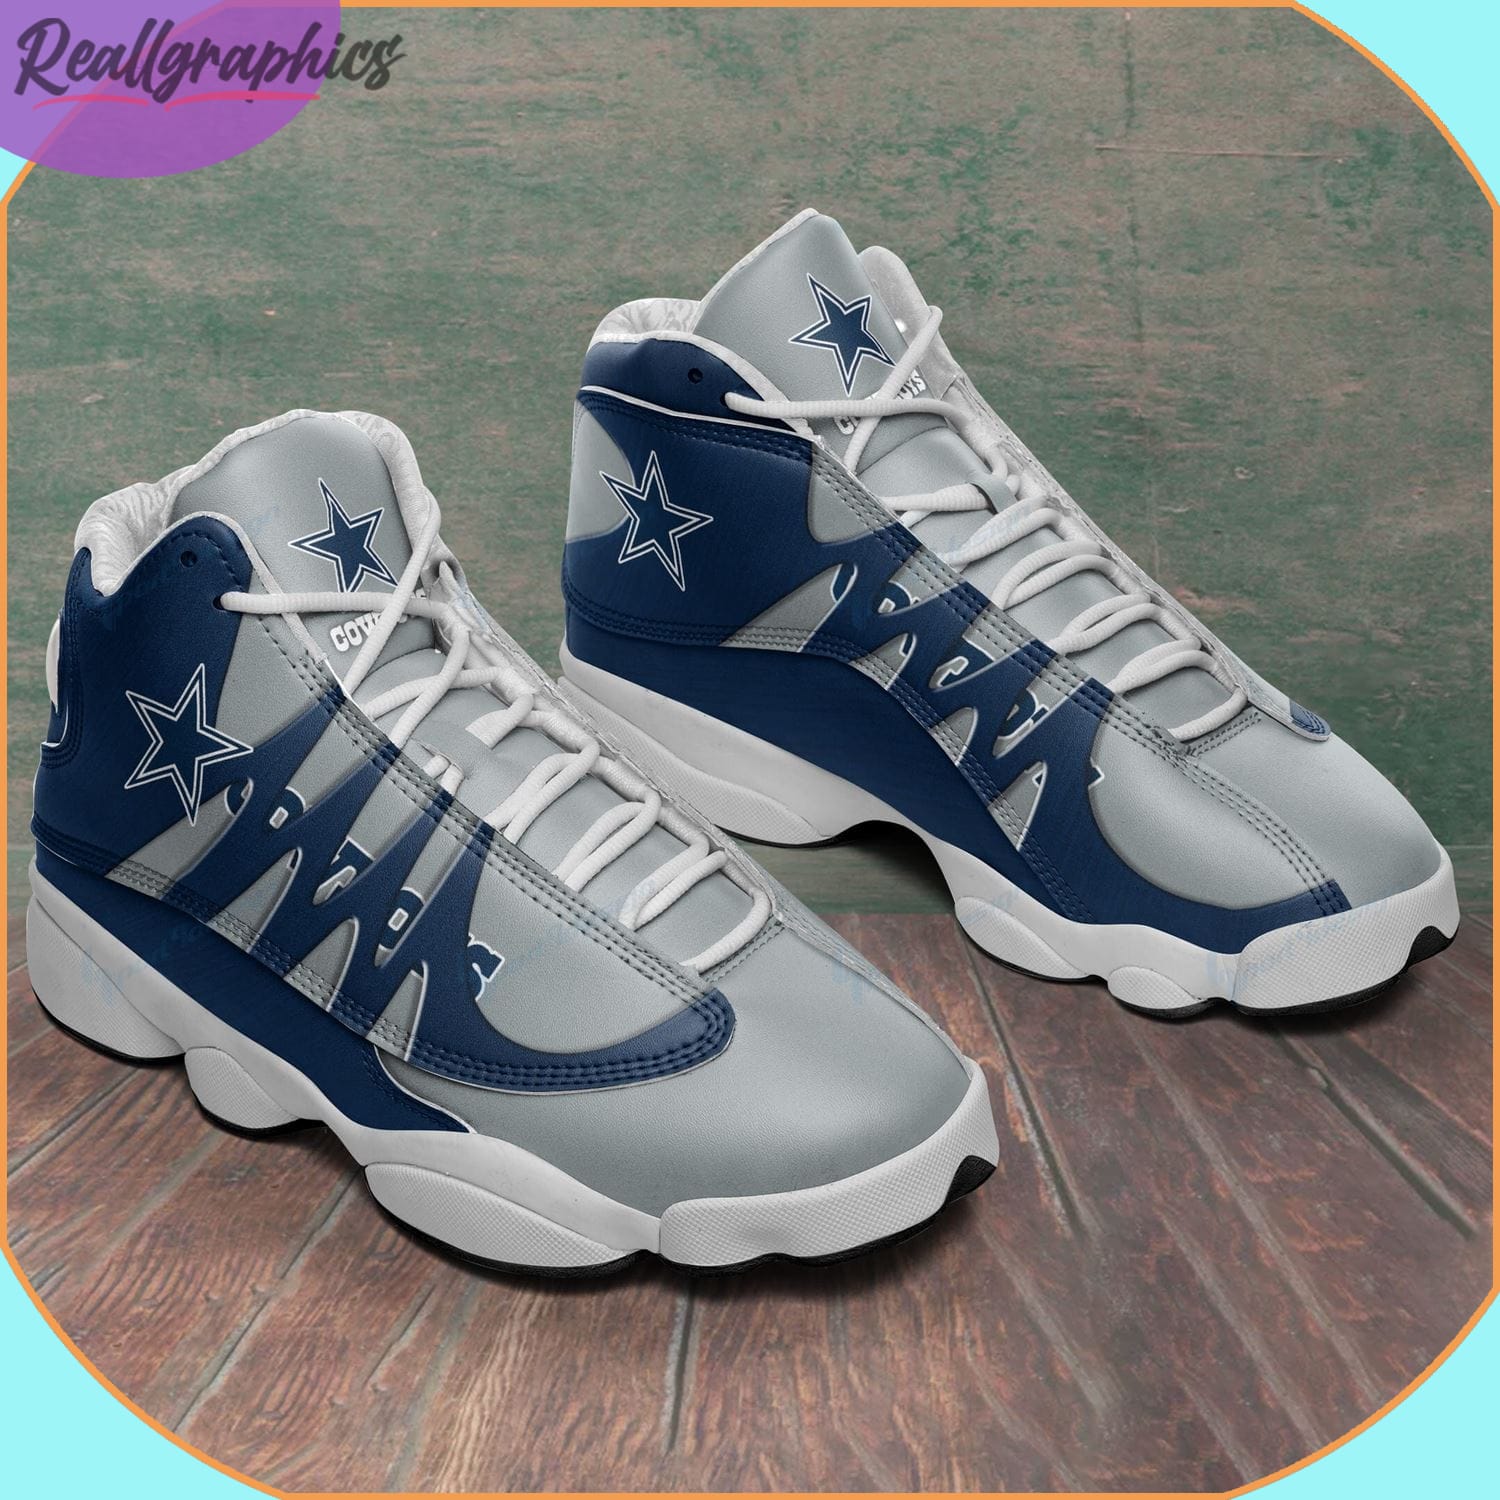 Dallas Cowboys Air Jordan 13 Shoes, Cowboys Limited Custom Shoes -  Reallgraphics